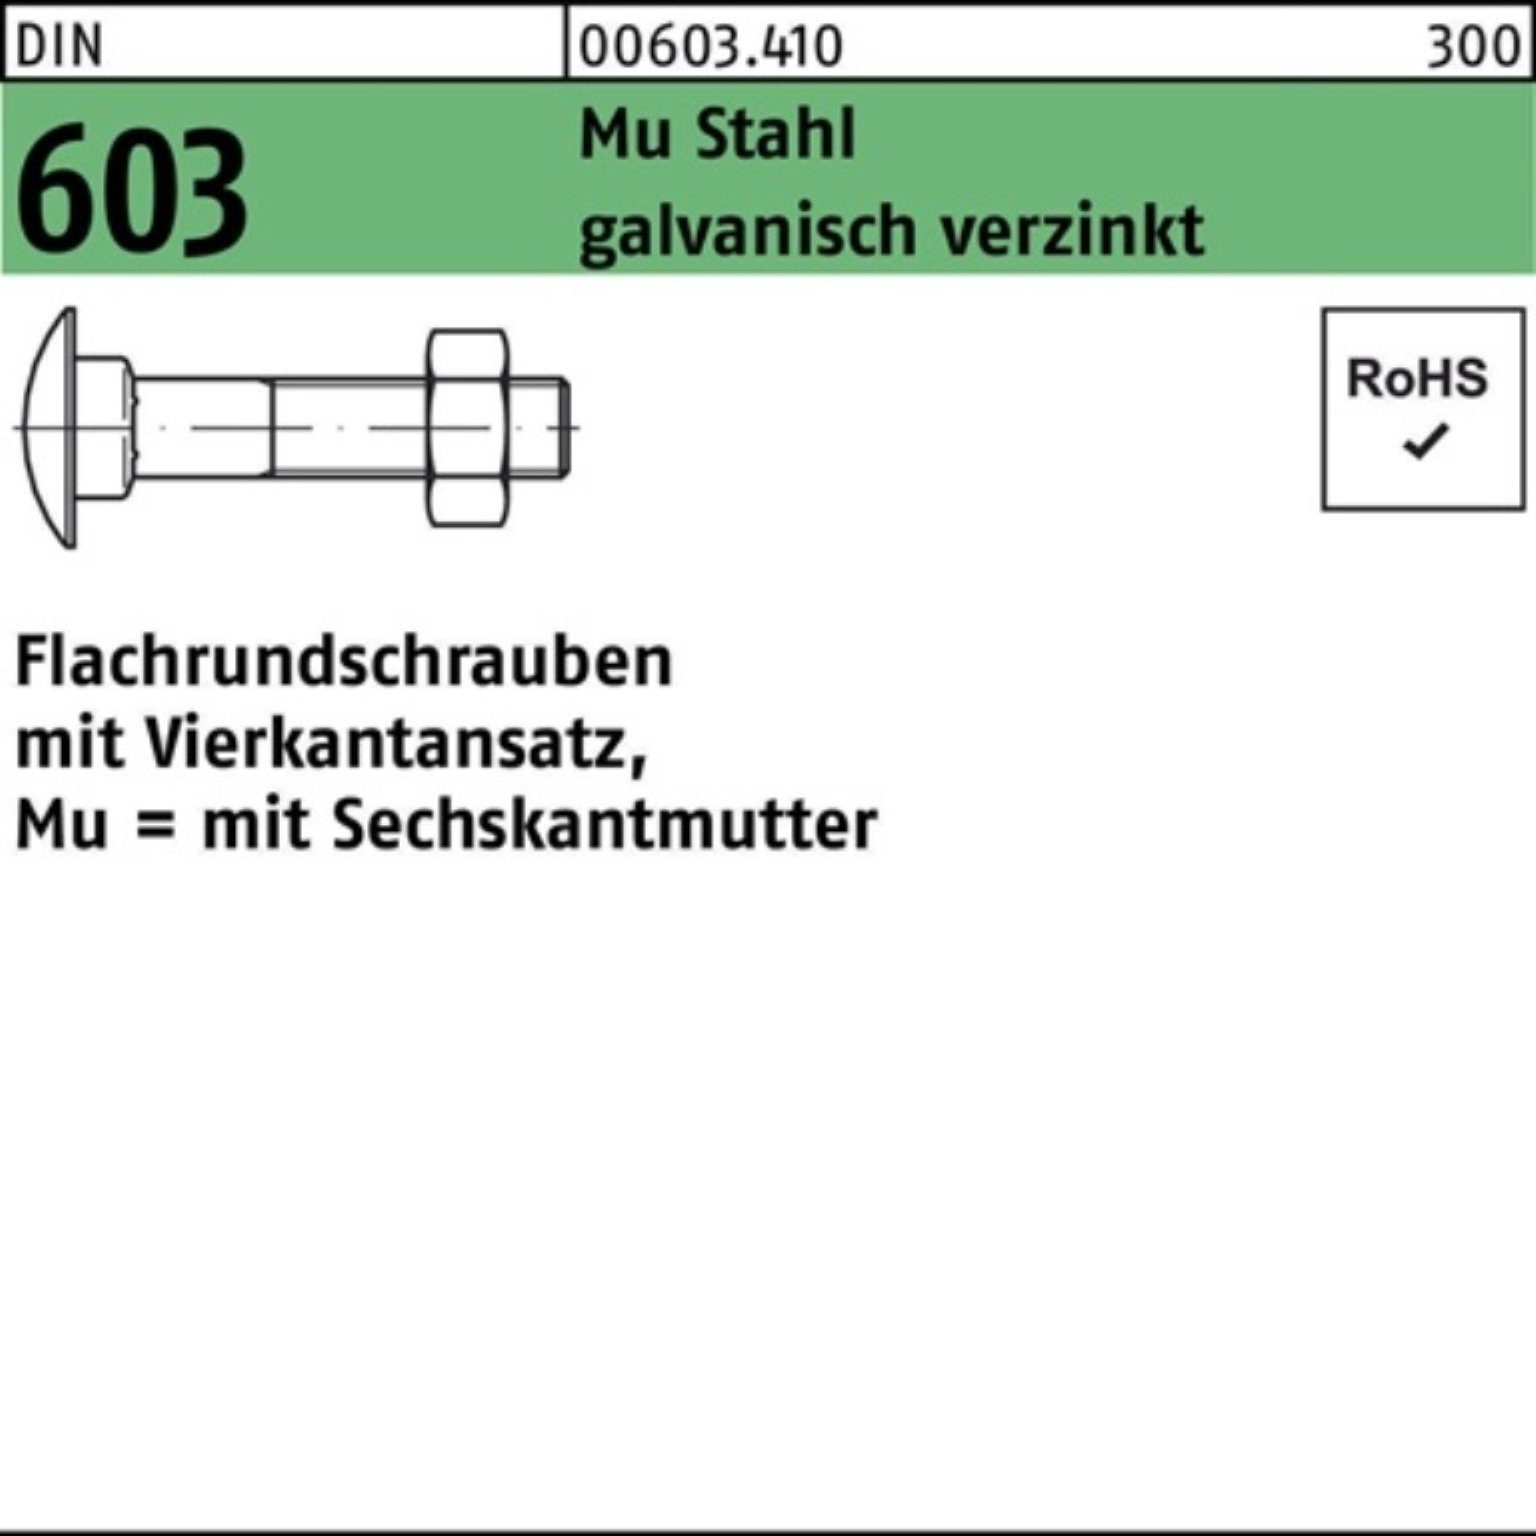 Vierkantansatz/6-ktmutter Reyher 603 Schraube M10x260 Flachrundschraube Pack DIN 100er